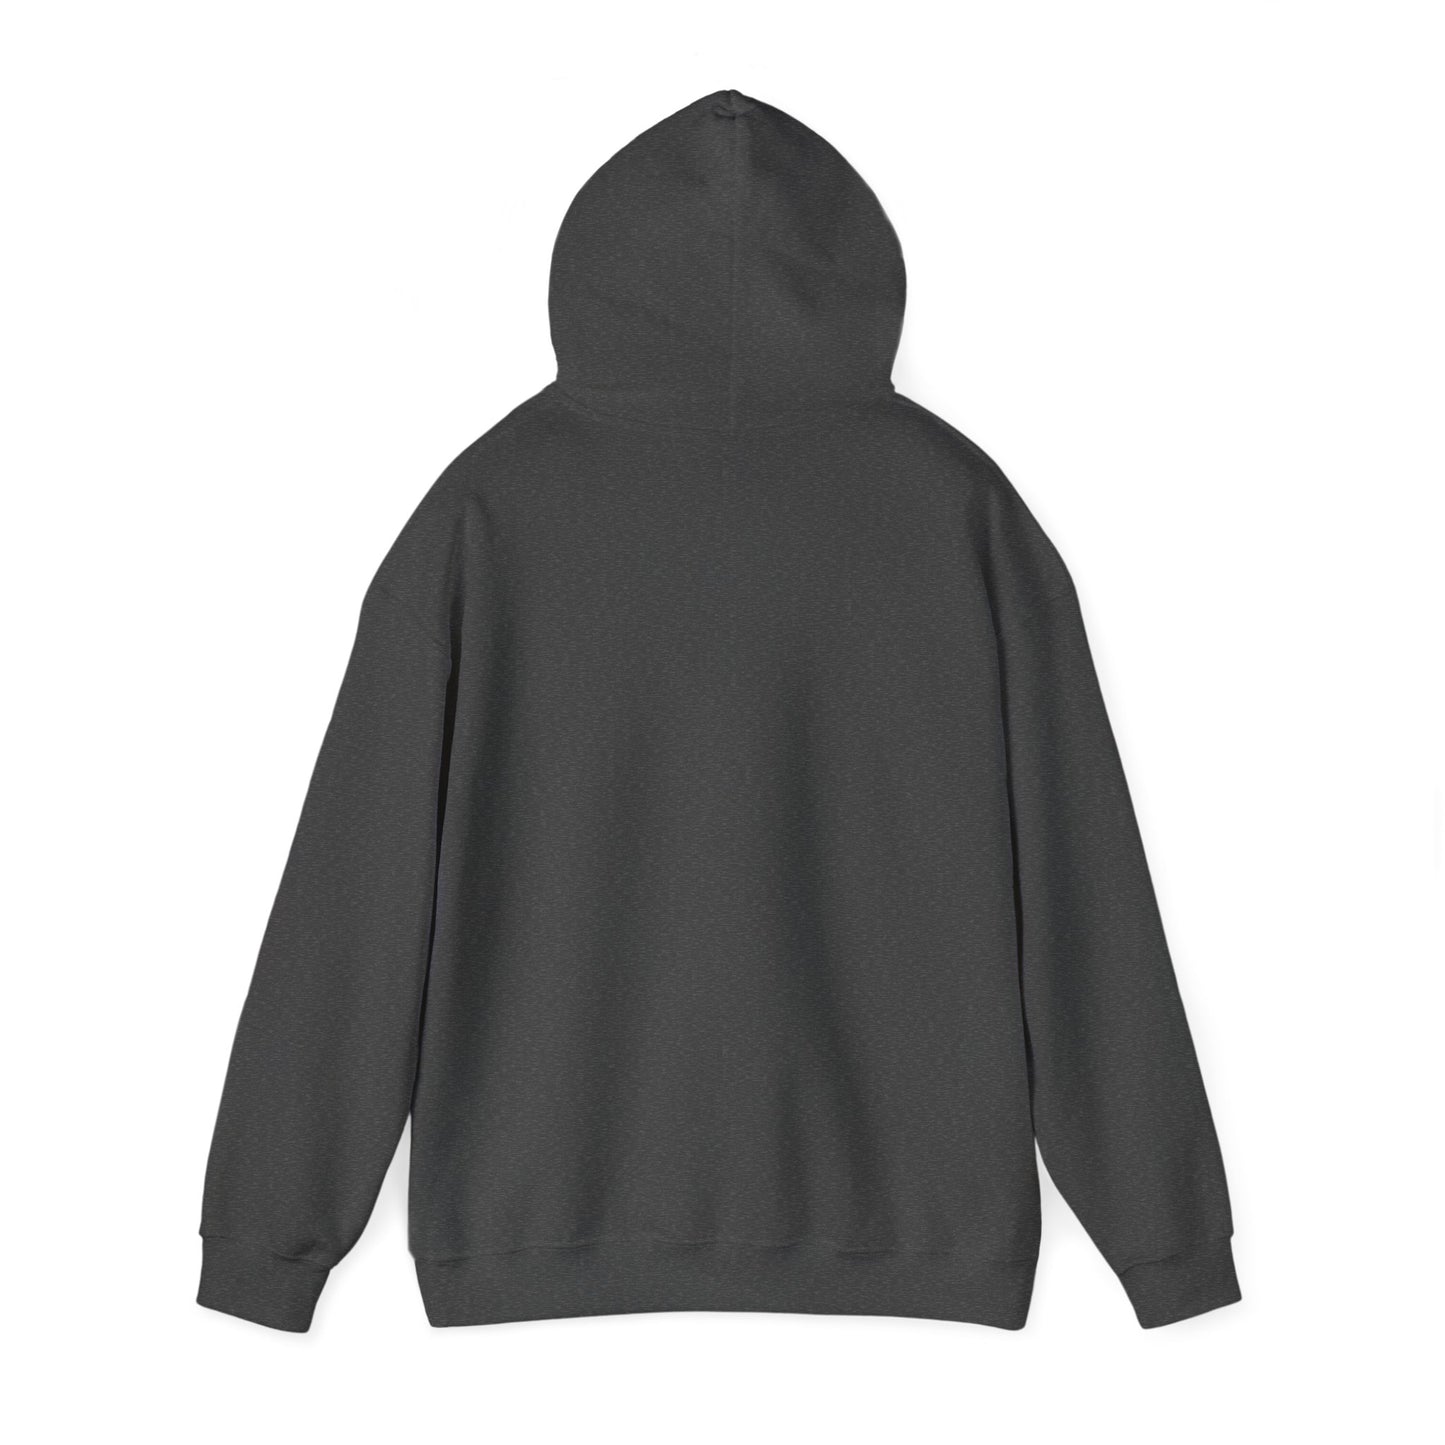 Available 24/7 Hooded Sweatshirt